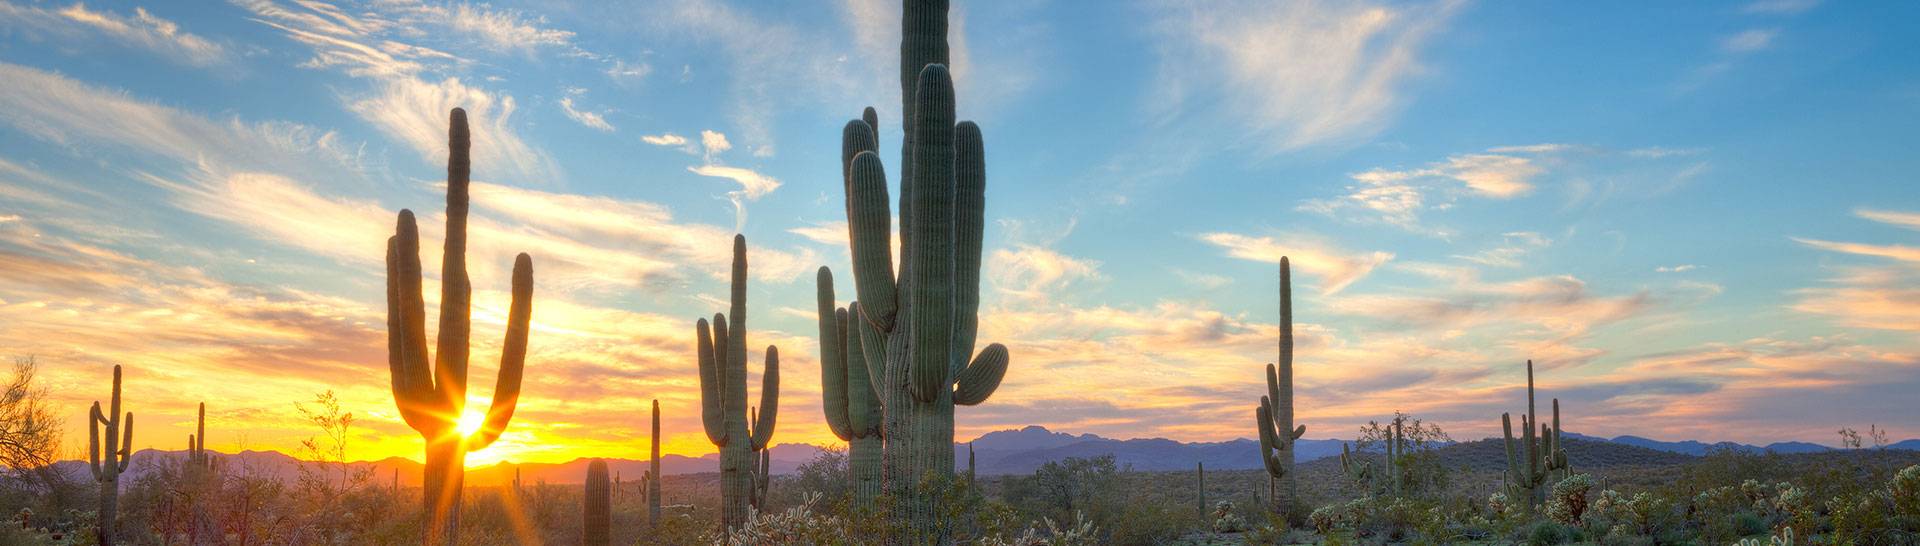 Arizona landscape sunset with Saguaro Cactus